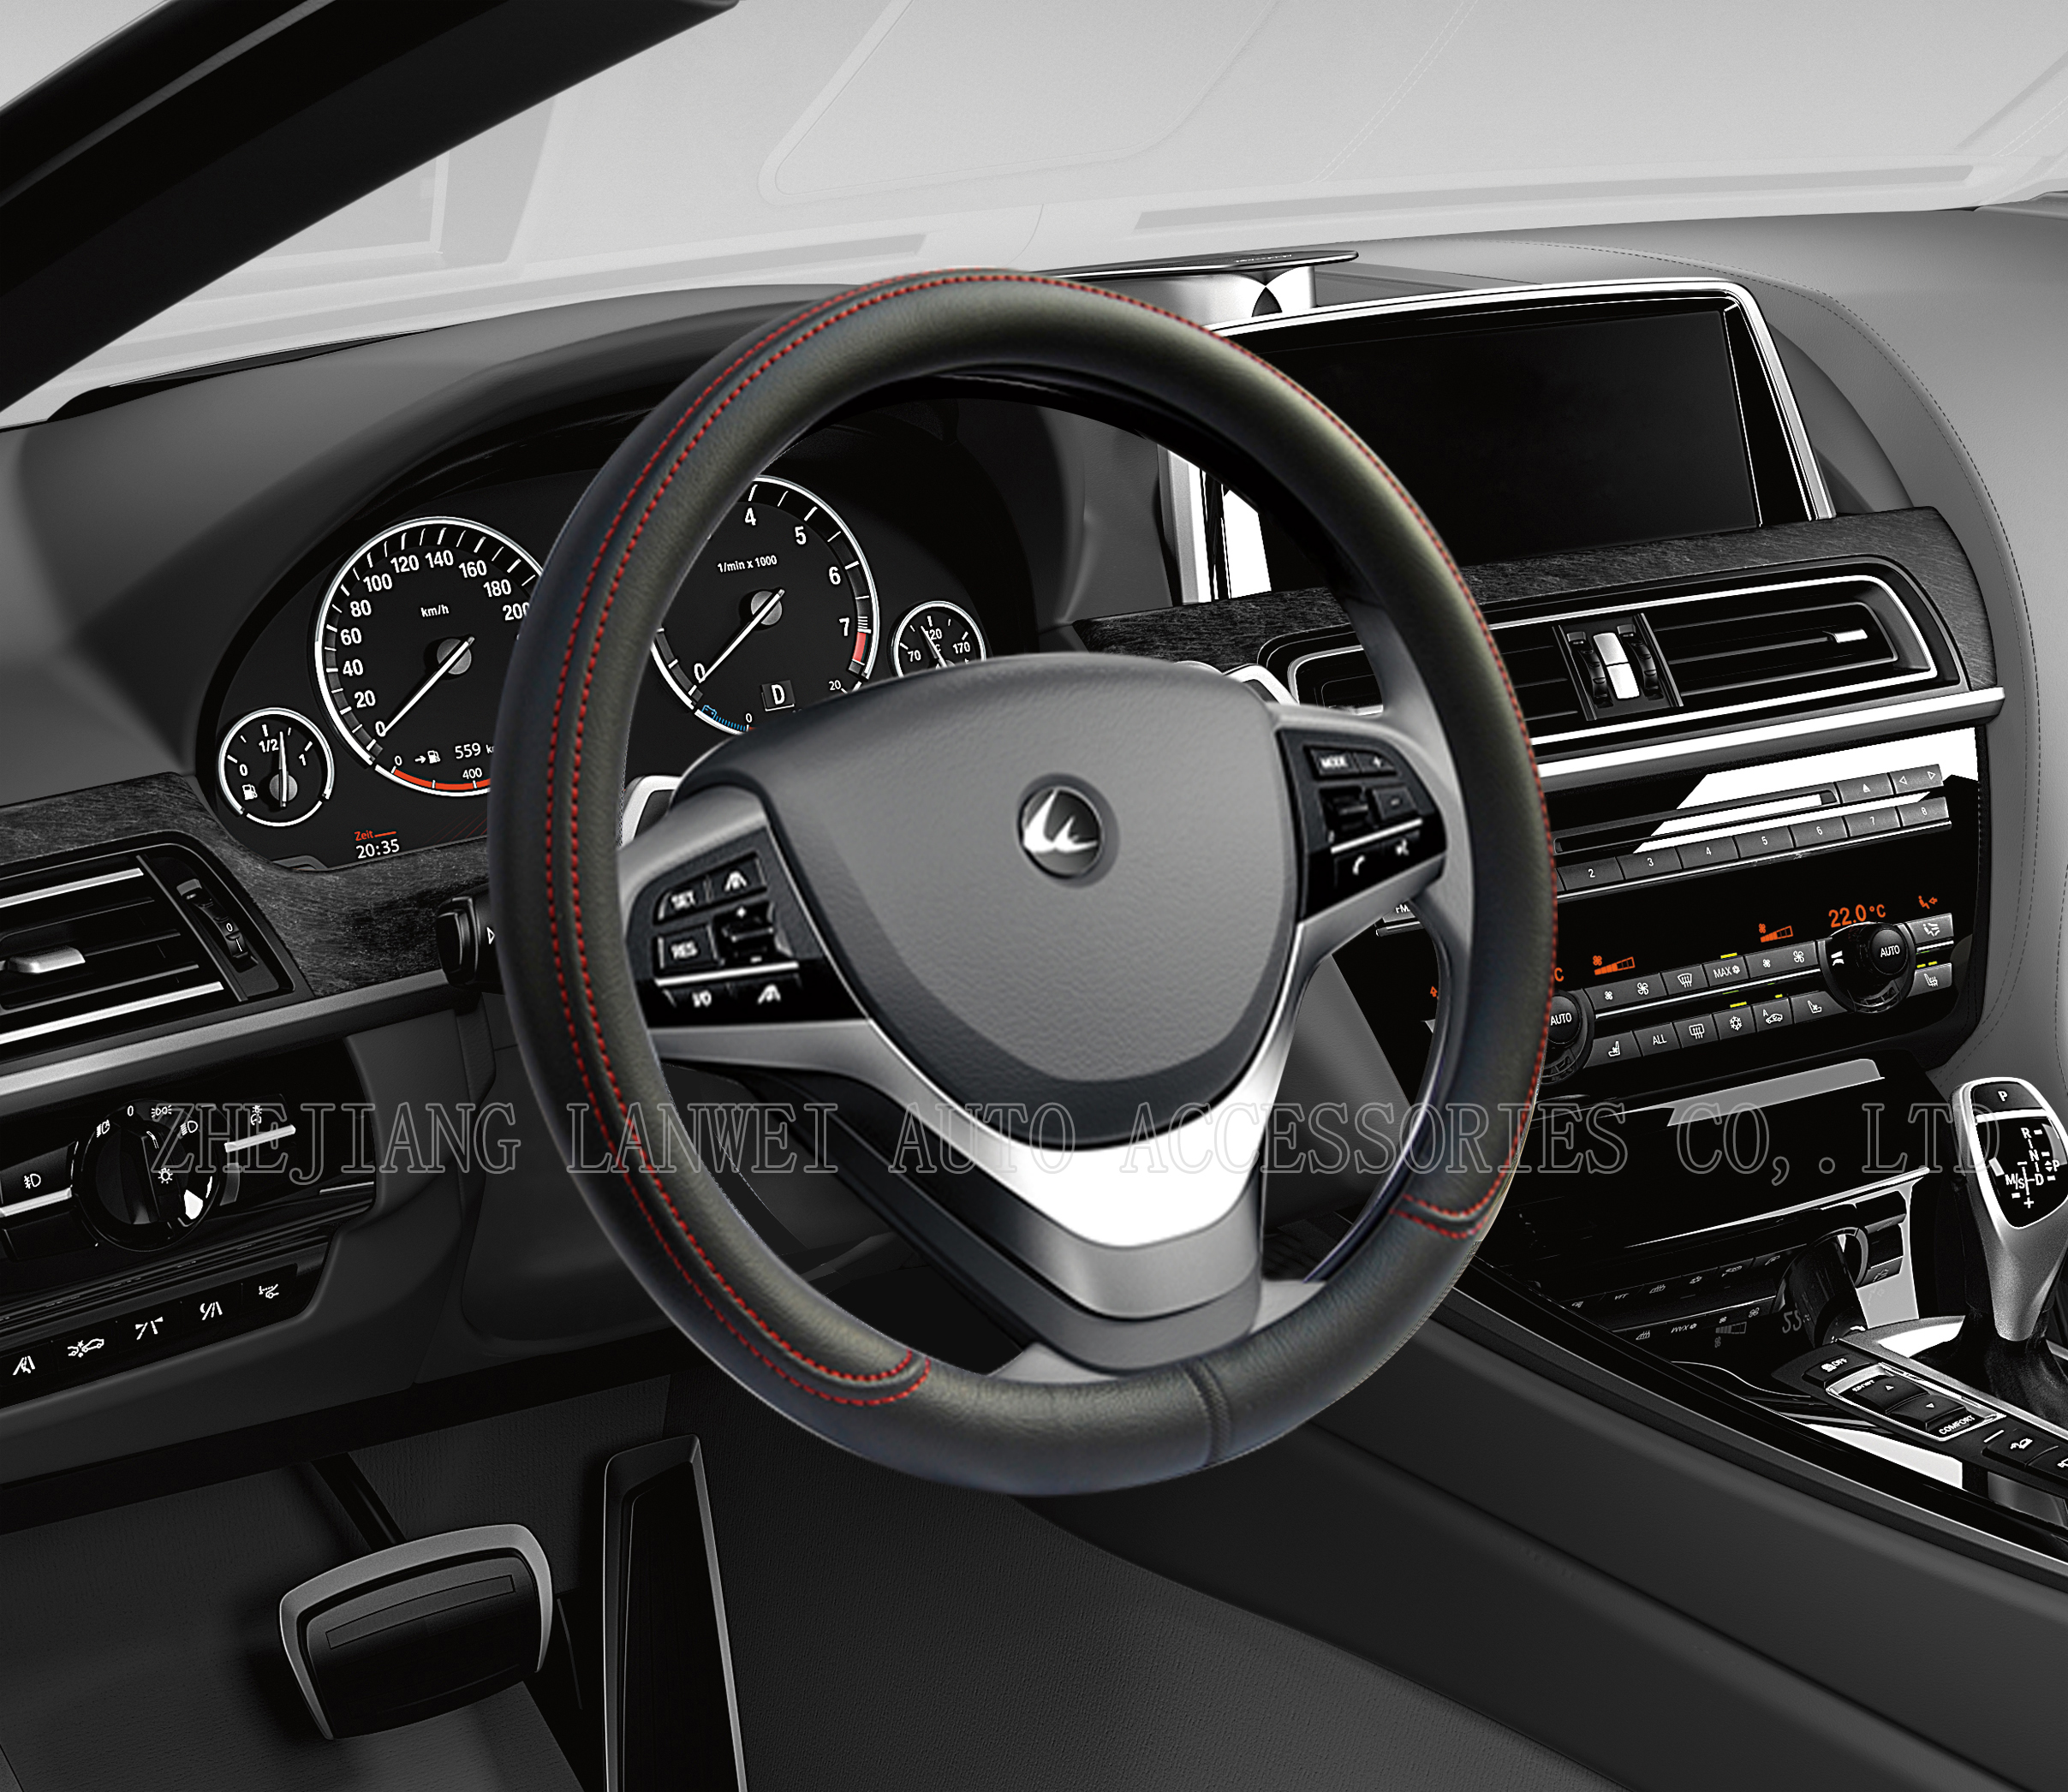 Wholesale PVC material car steering wheel cover